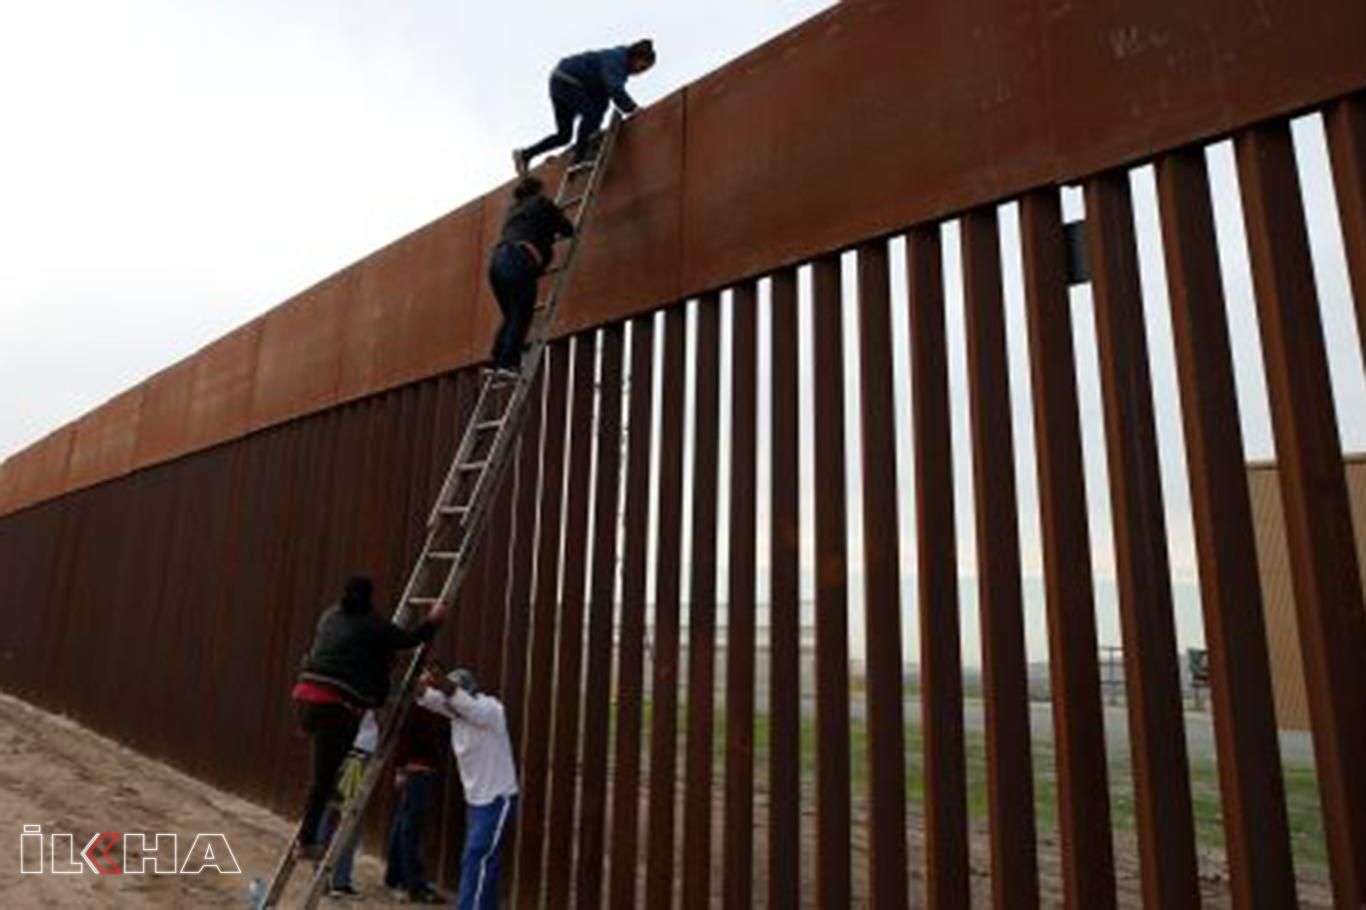 Texas will build a border wall, Gov. Greg Abbott says